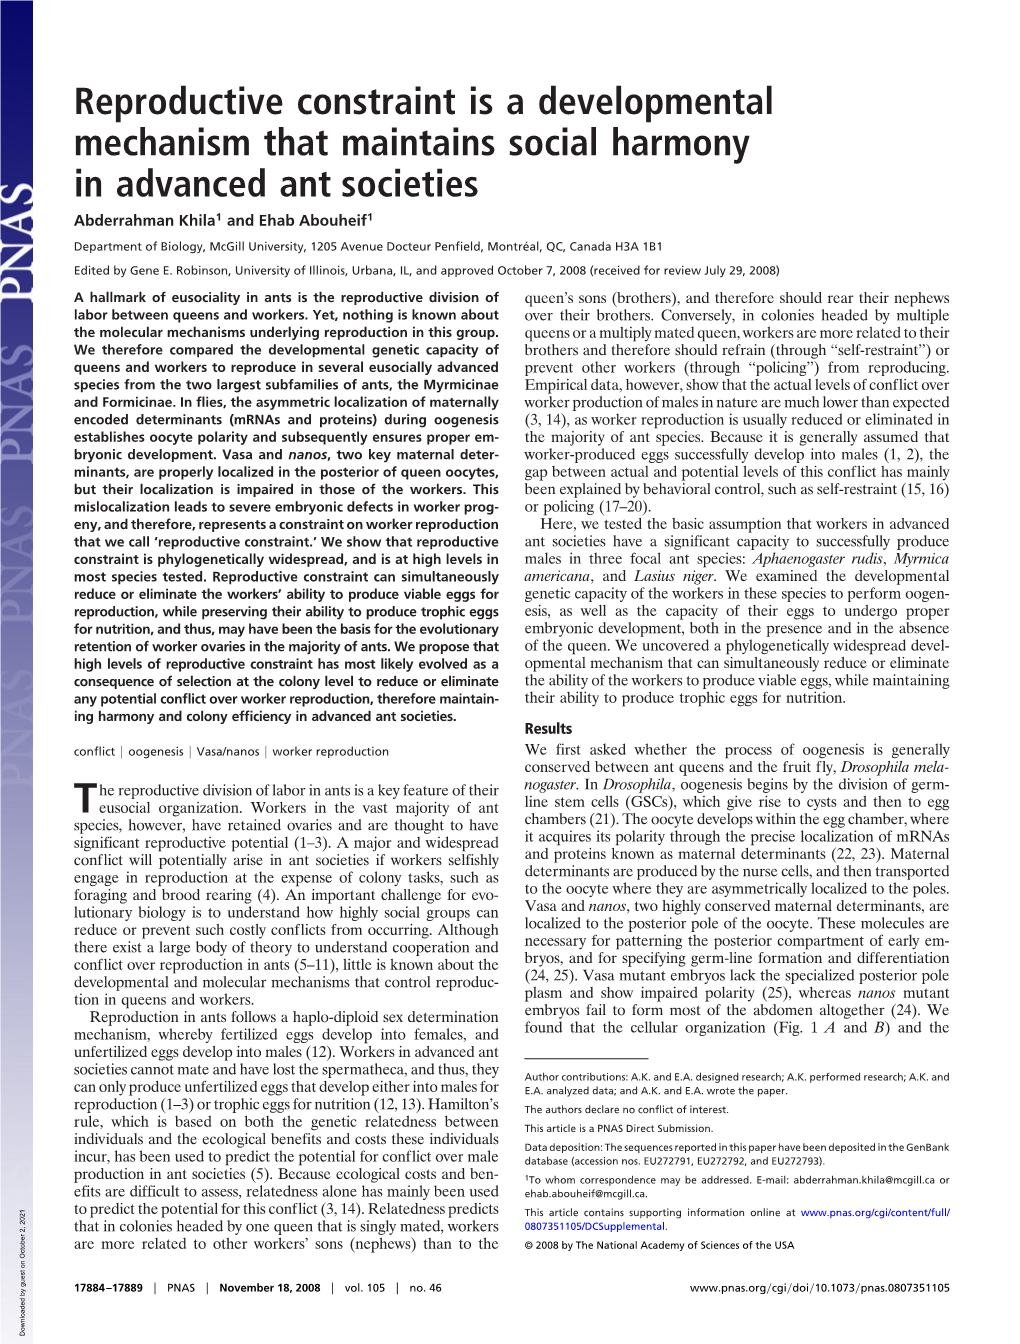 Reproductive Constraint Is a Developmental Mechanism That Maintains Social Harmony in Advanced Ant Societies Abderrahman Khila1 and Ehab Abouheif1